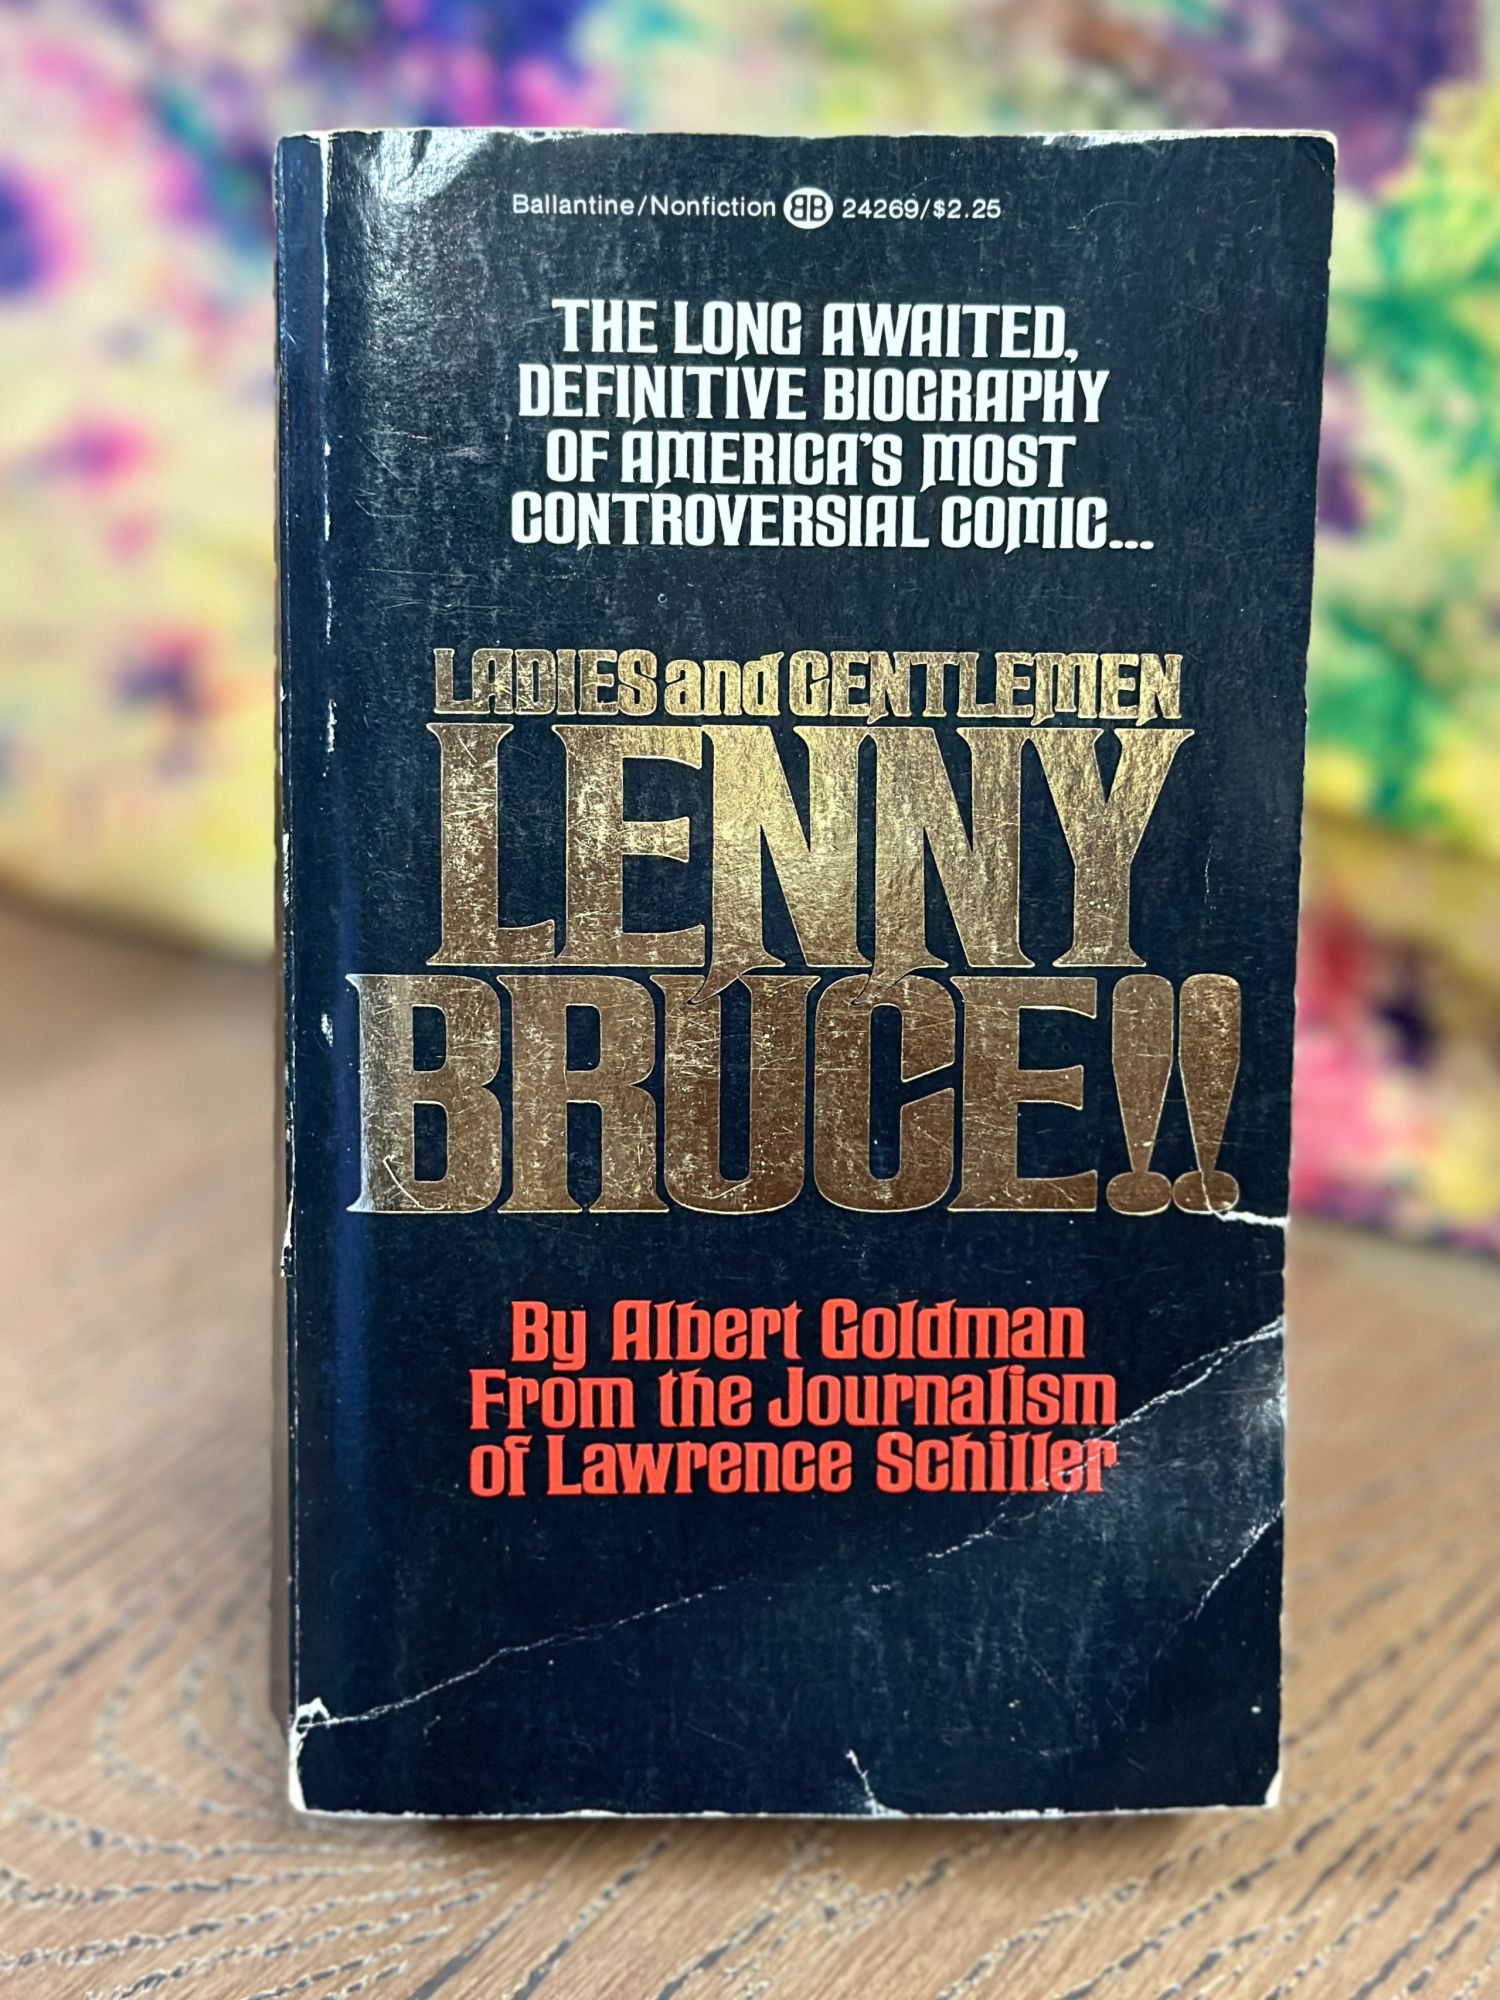 Ladies and Gentlemen Lenny Bruce!! by Albert Goldman on Chamblin Bookmine